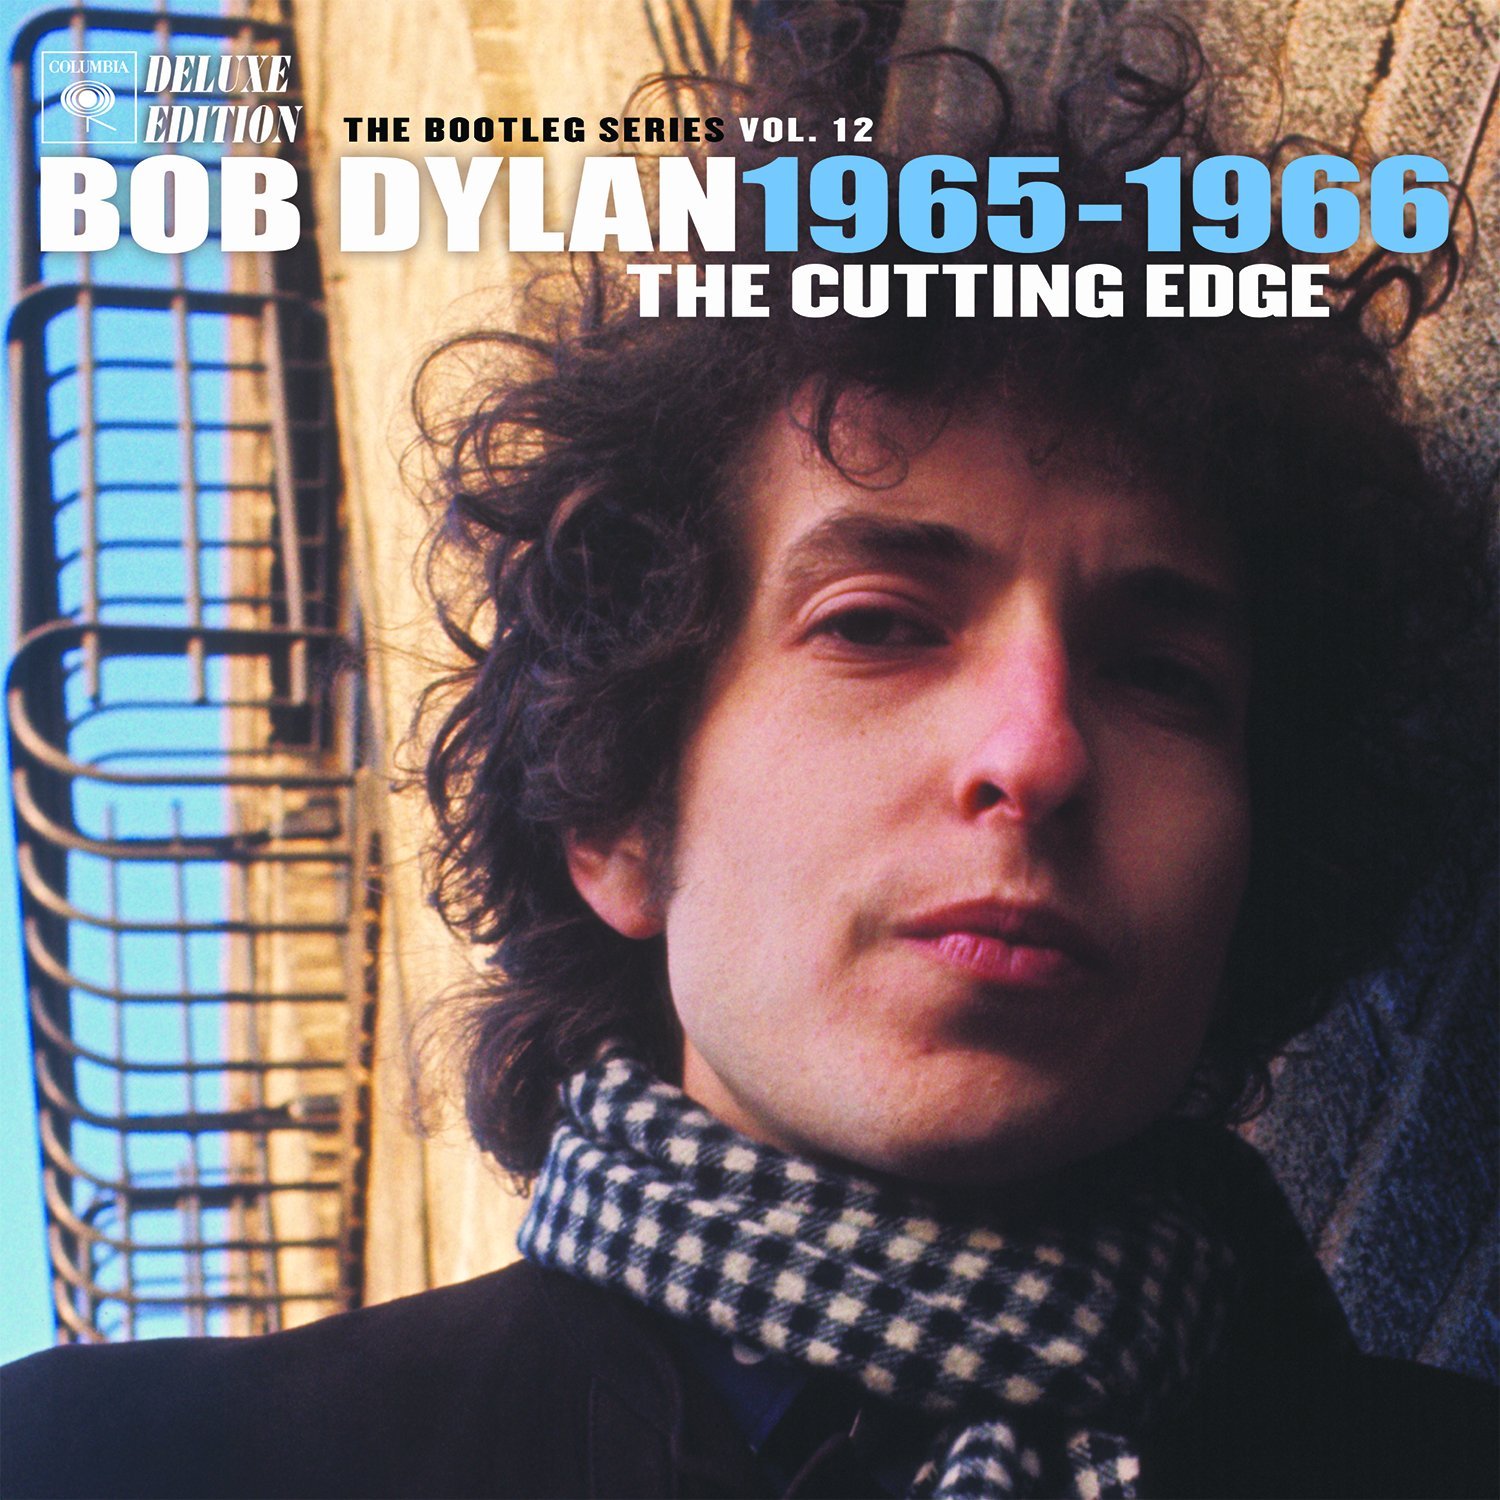 Bob Dylan - The Cutting Edge 1965-1966: Bootleg Series Vol. 12 {Deluxe Edition} (2015) [HDTracks FLAC 24bit/96kHz]